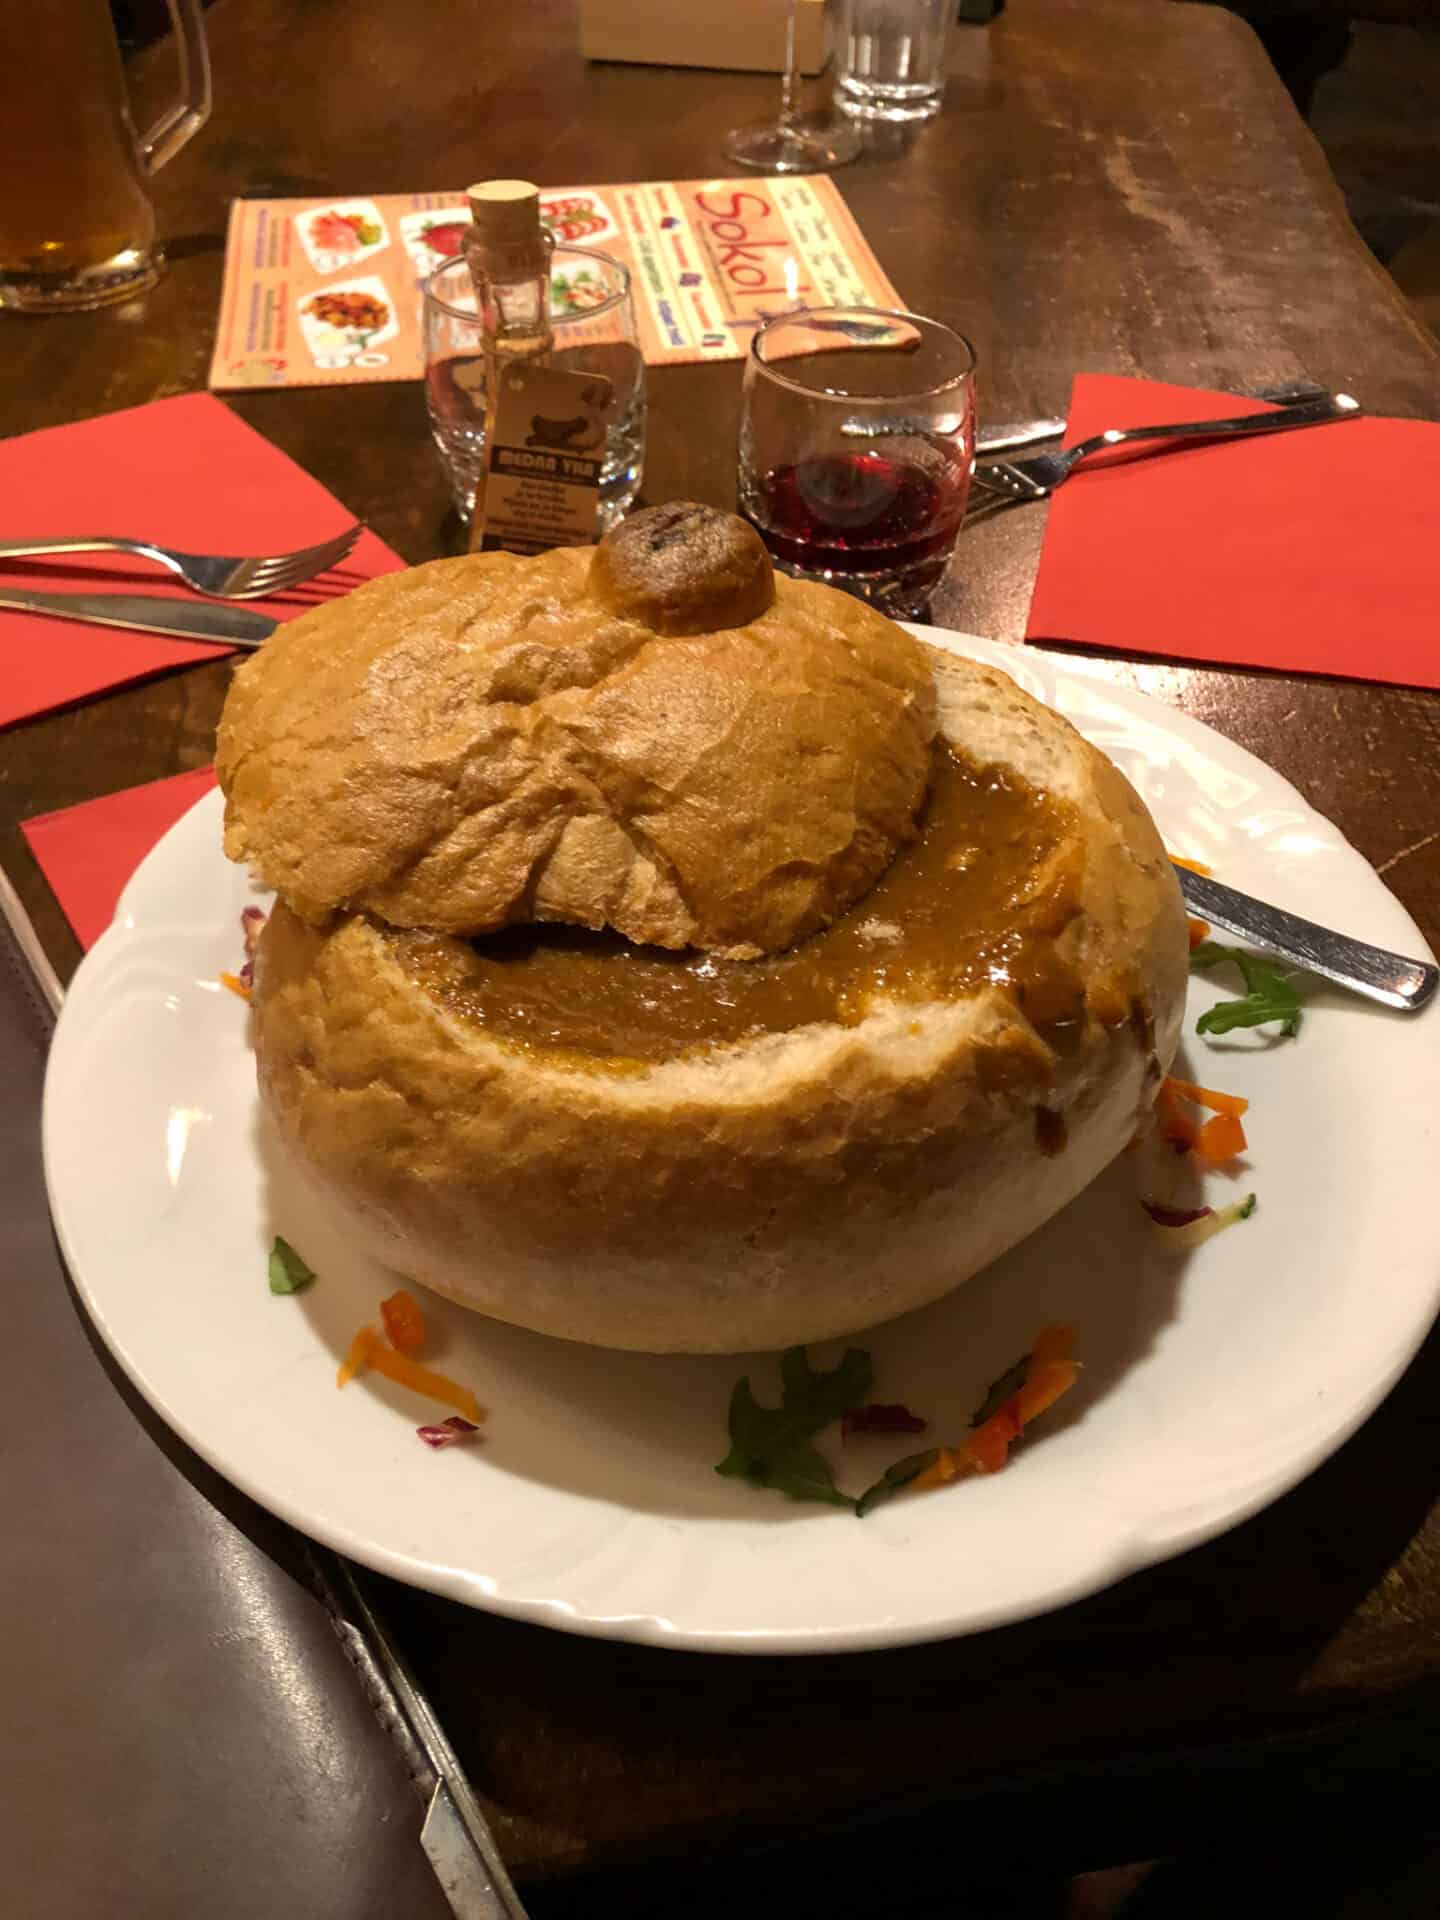 venison gulash served in a bread bowl